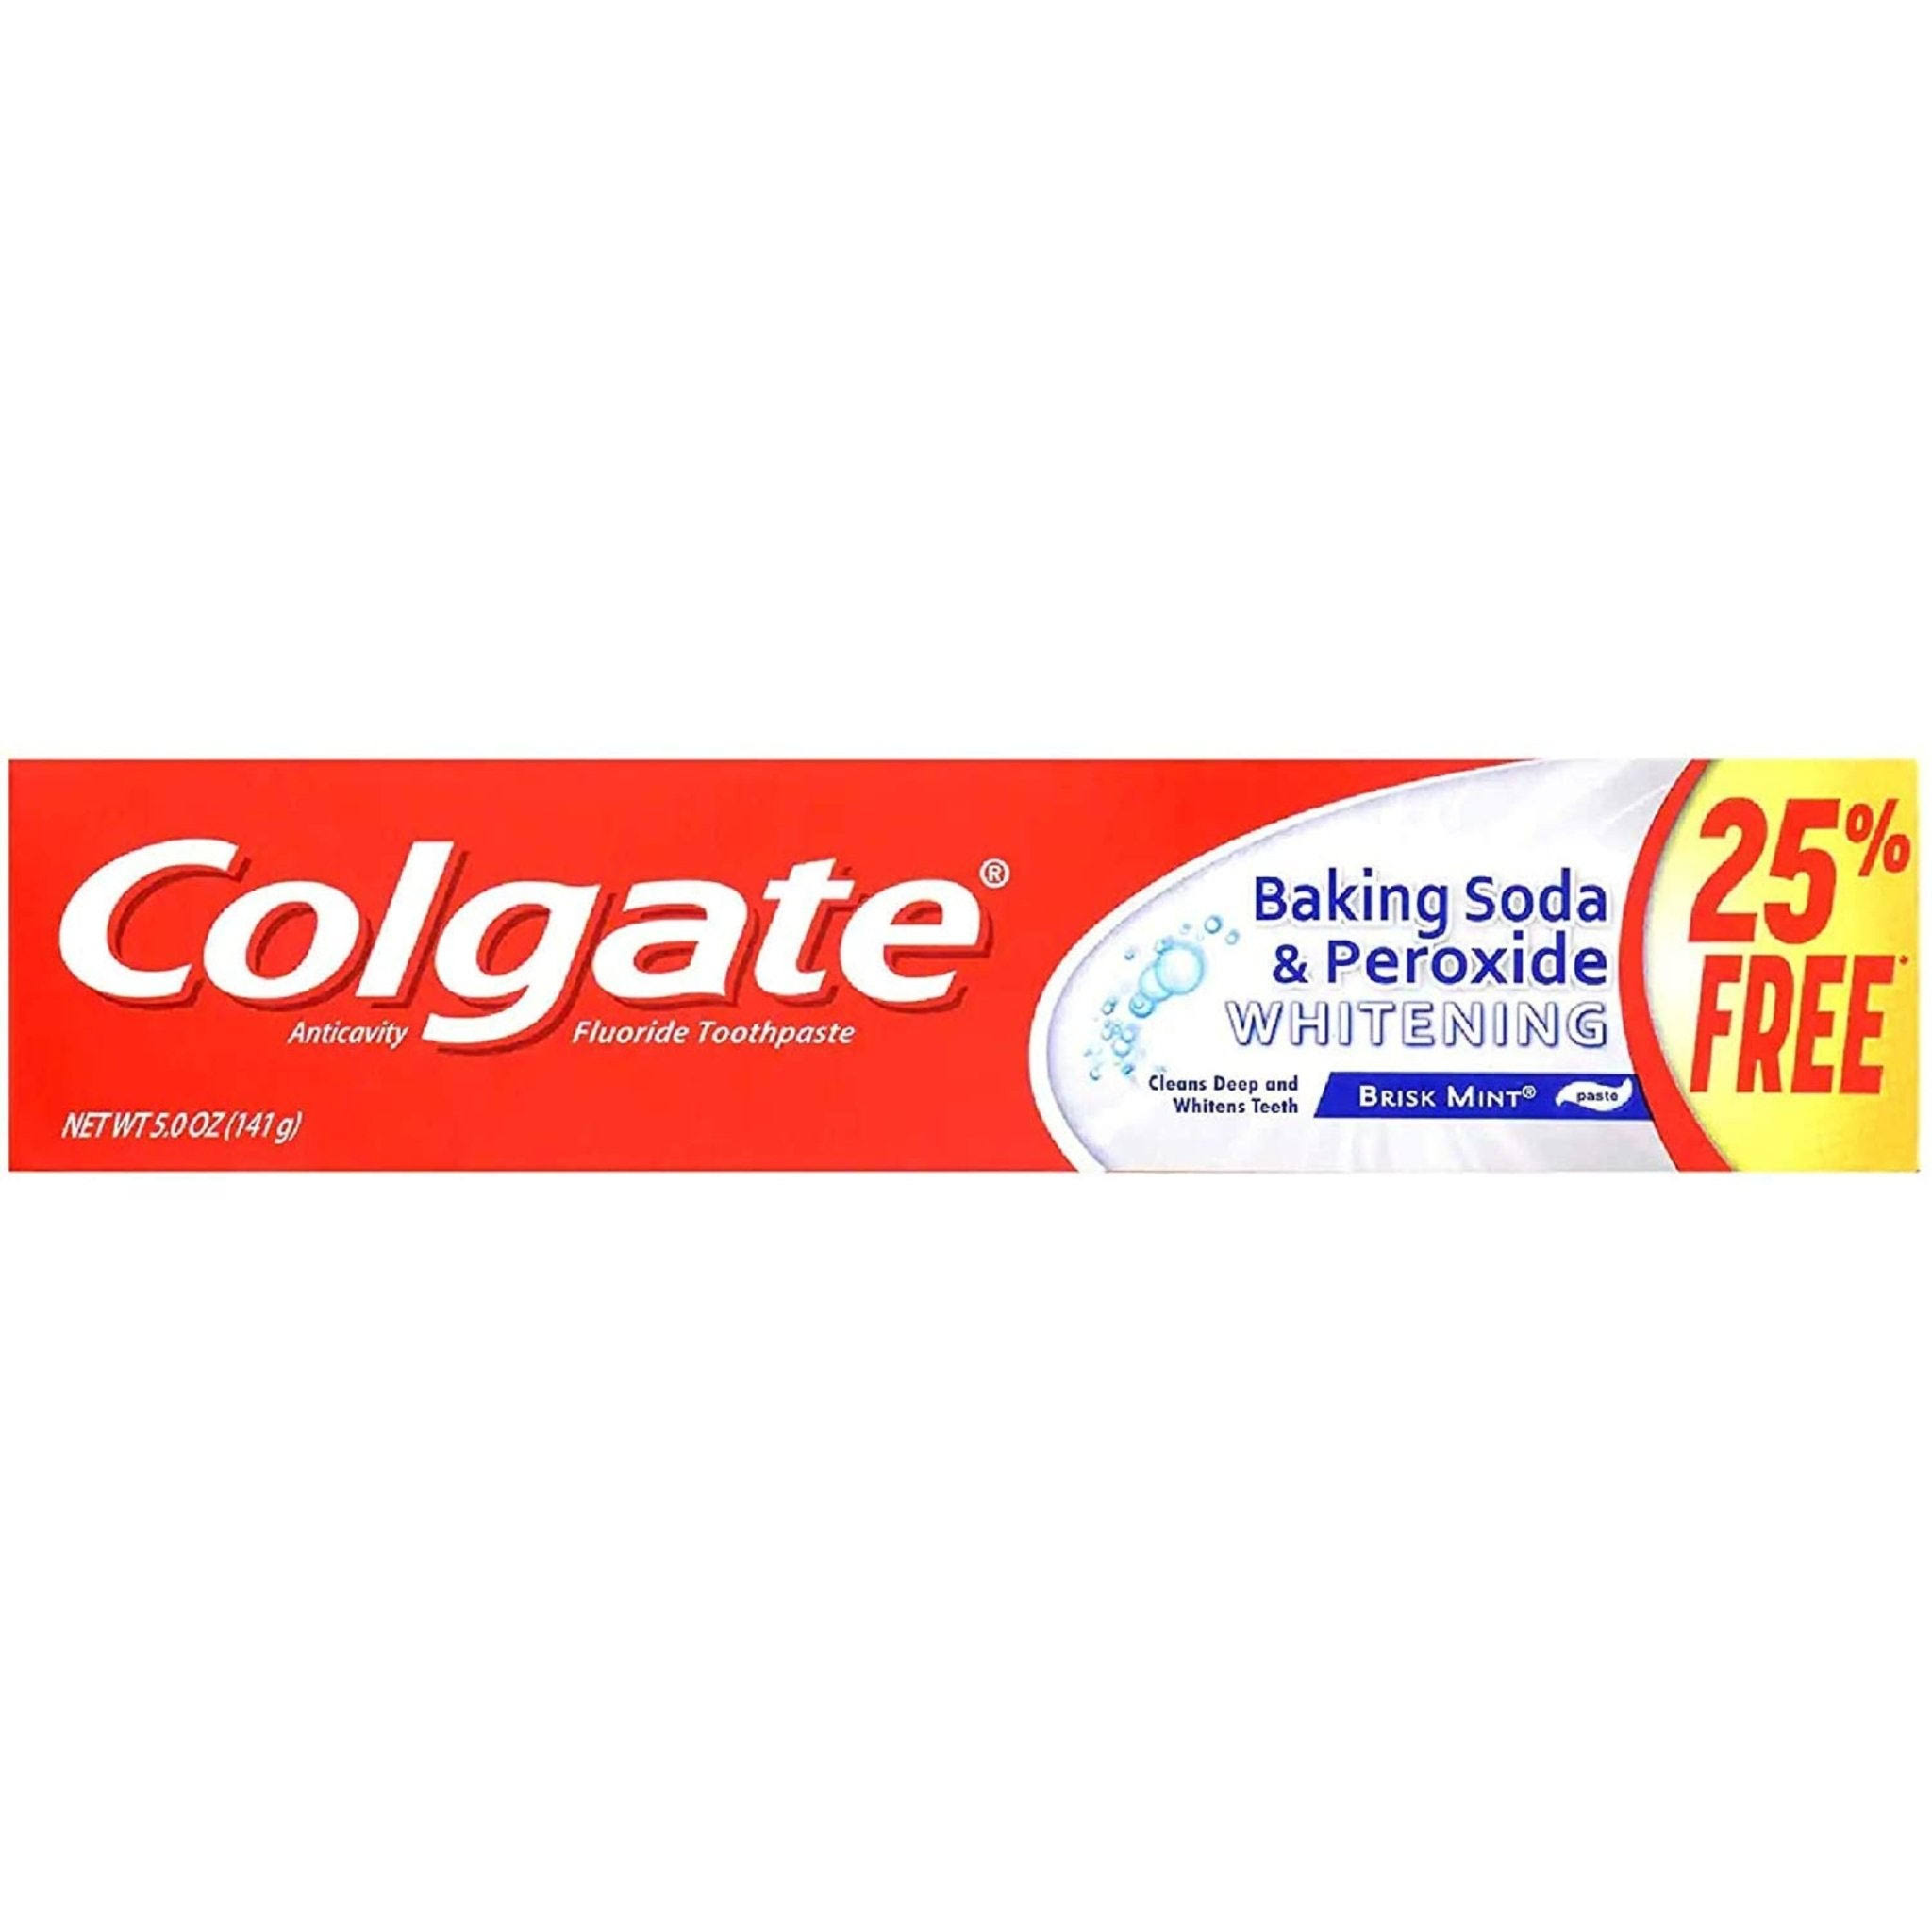 Colgate Toothpaste, Anticavity, Fluoride, Brisk Mint - 5.0 oz